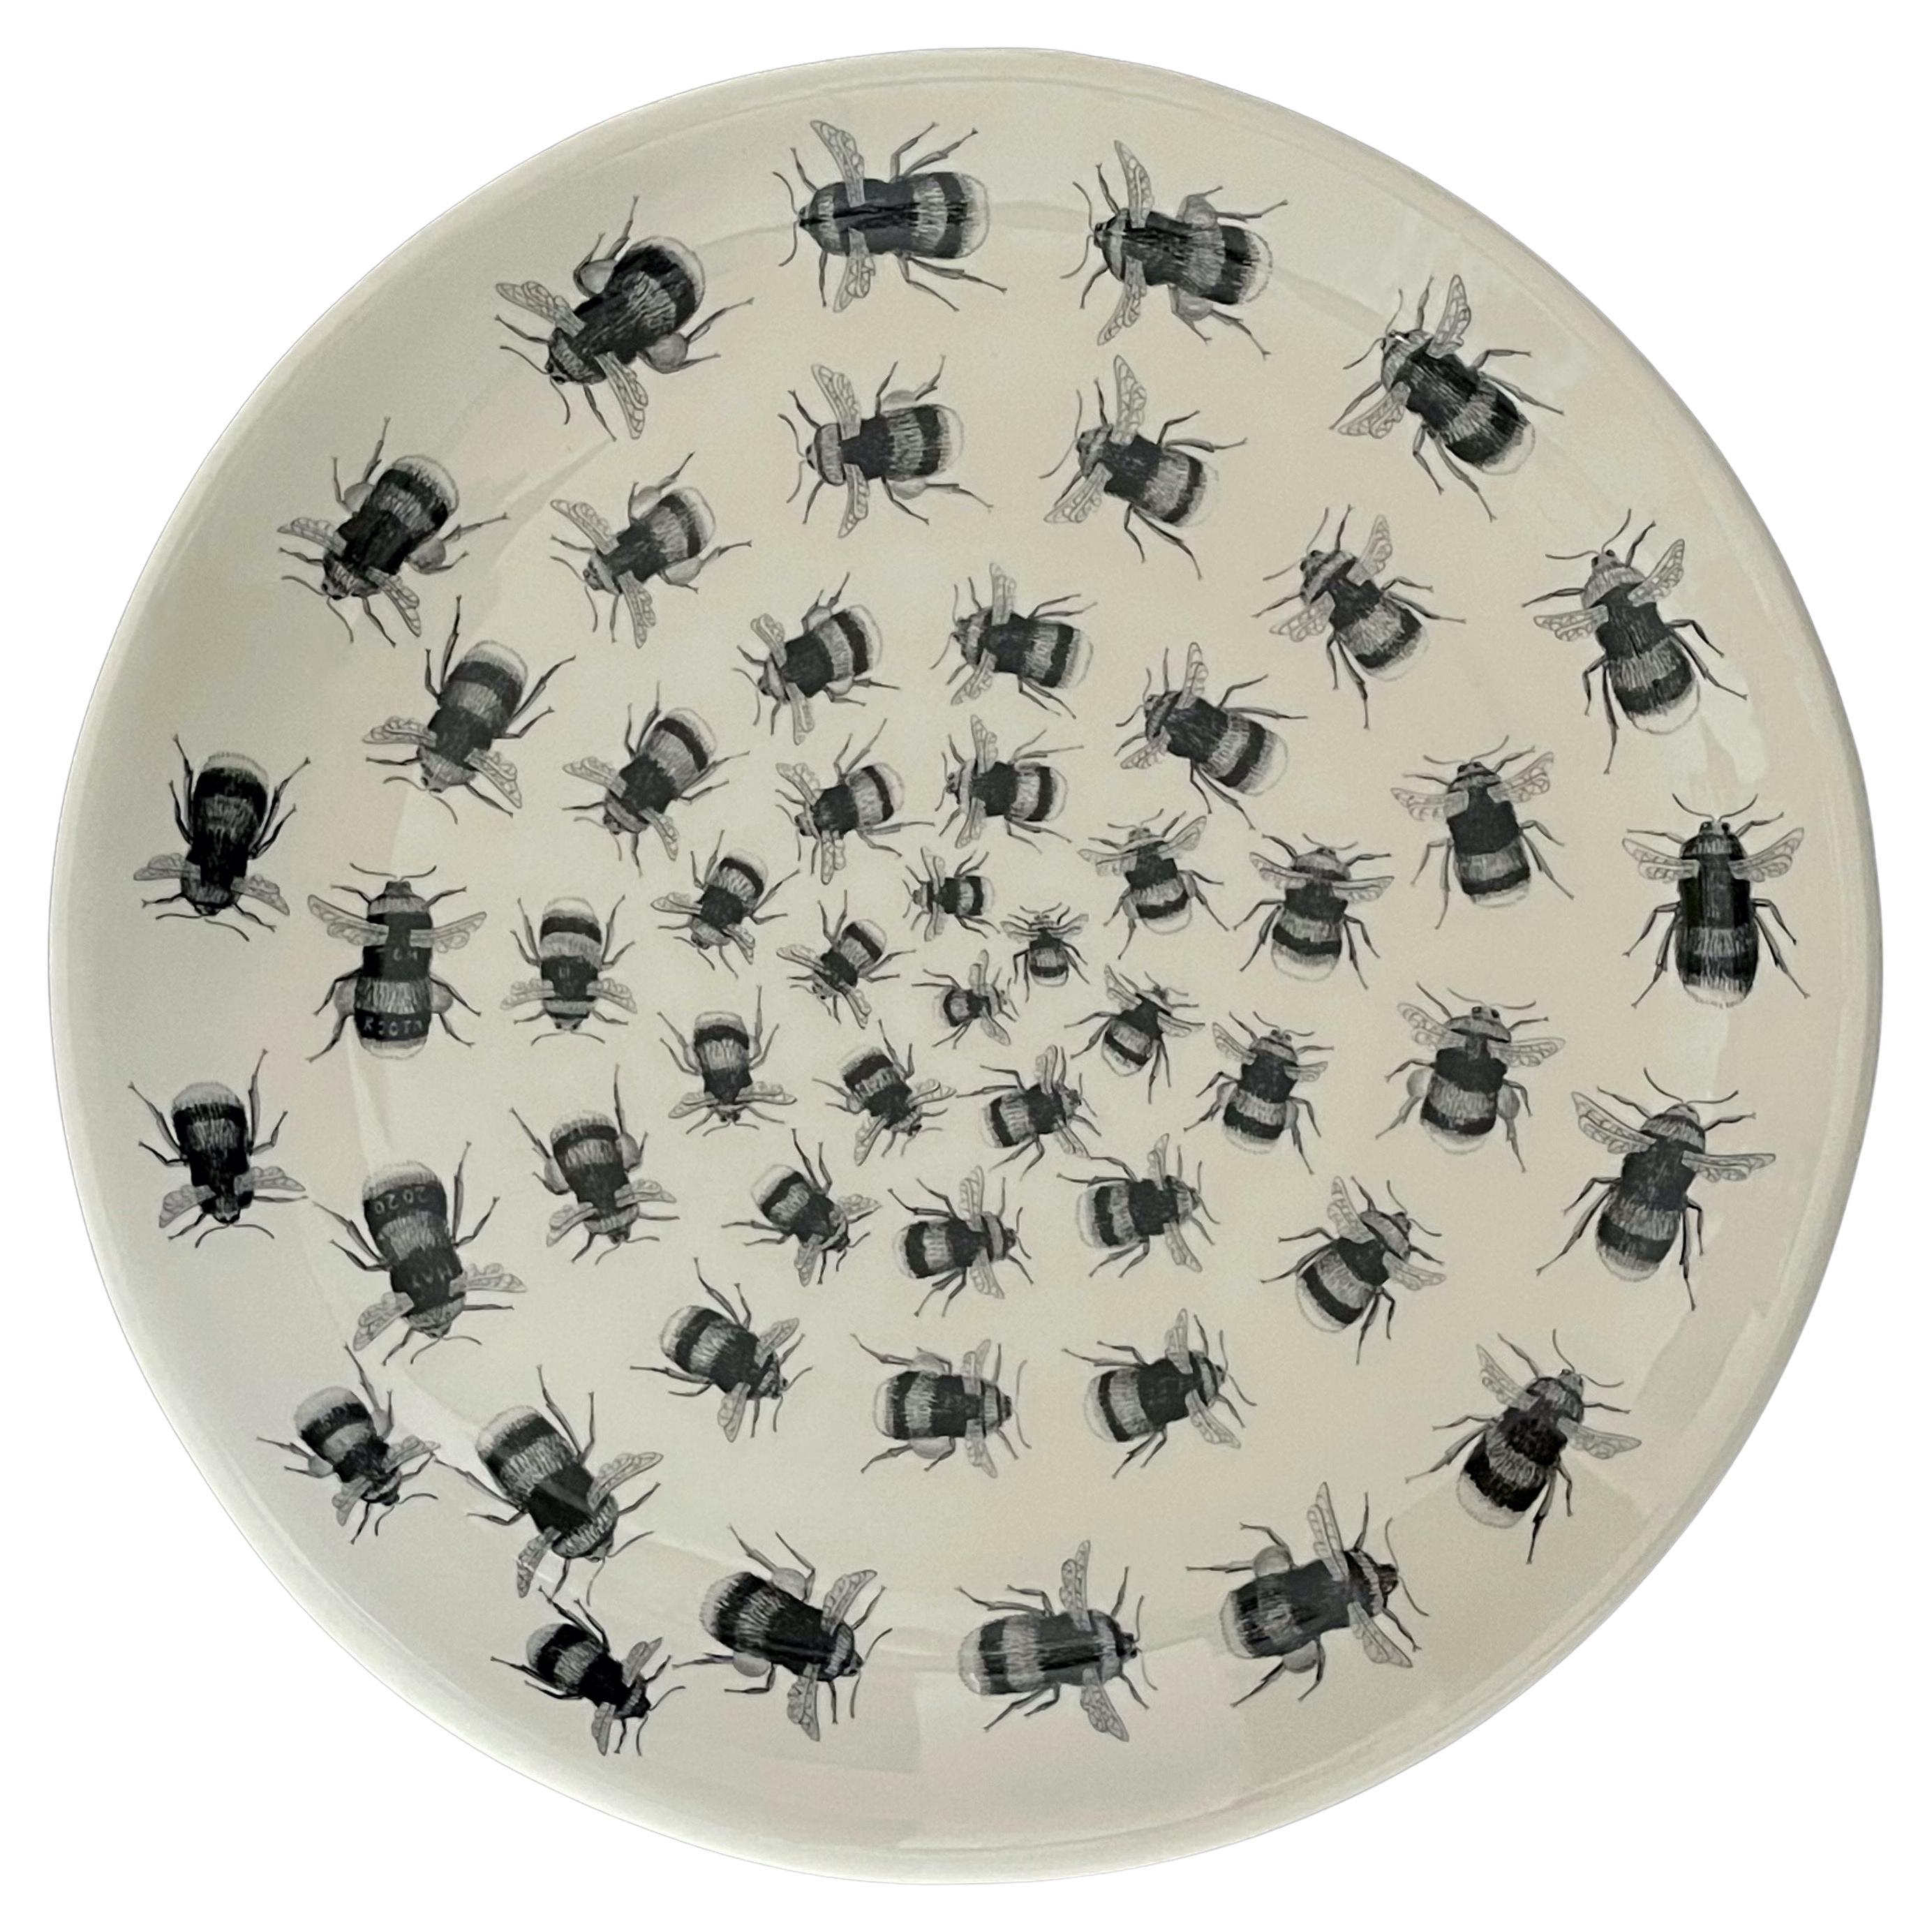 « The Signed Bee Flying in the Opposite Direction » (la abeille volant dans la direction opposée), de Tom Rooth en vente